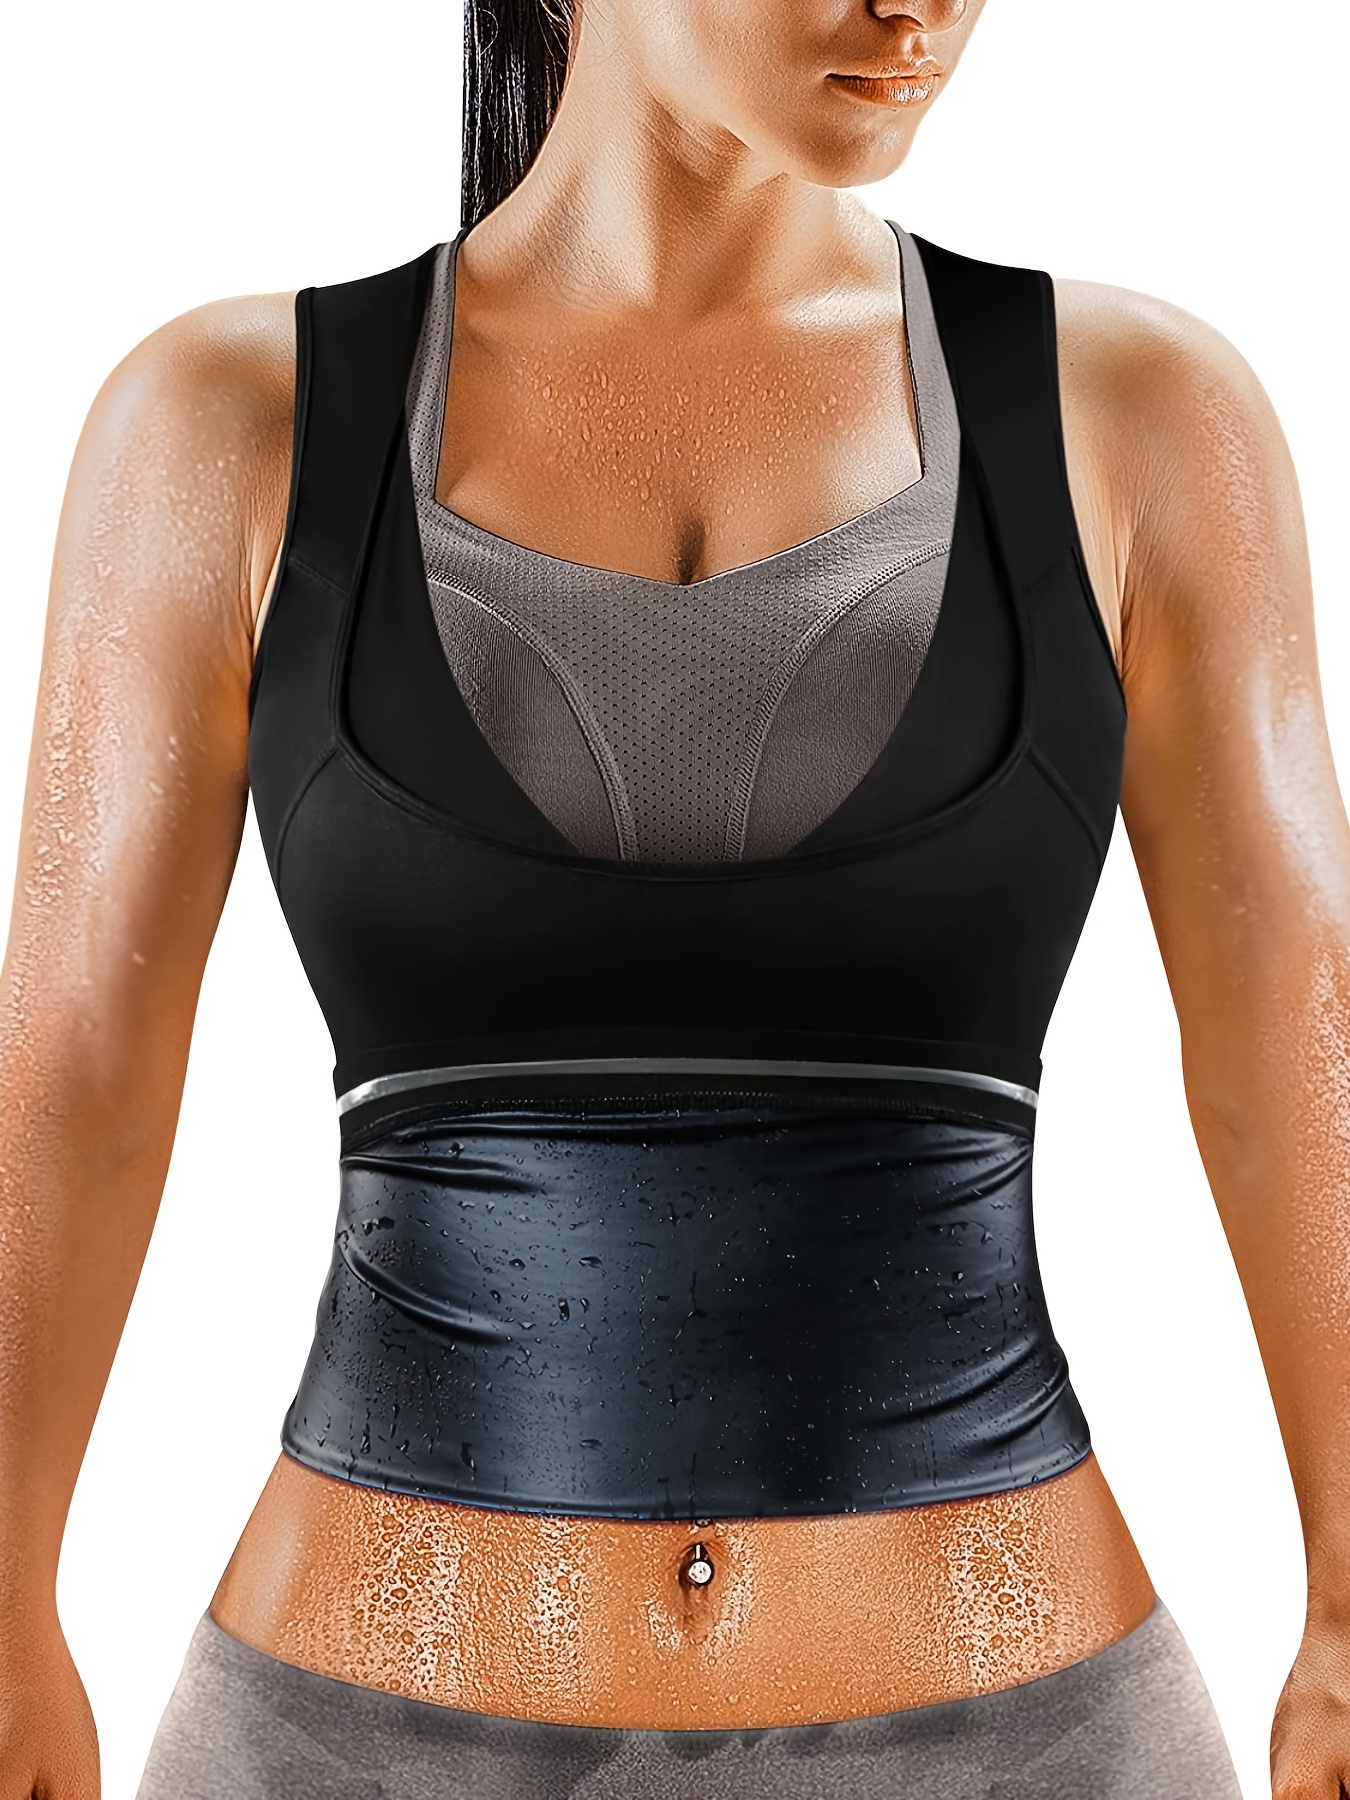 Sauna Vest Sweat Waist Trainer For Women Lower Belly Fat With Sauna Suit  Effect Neoprene Workout Tank Top